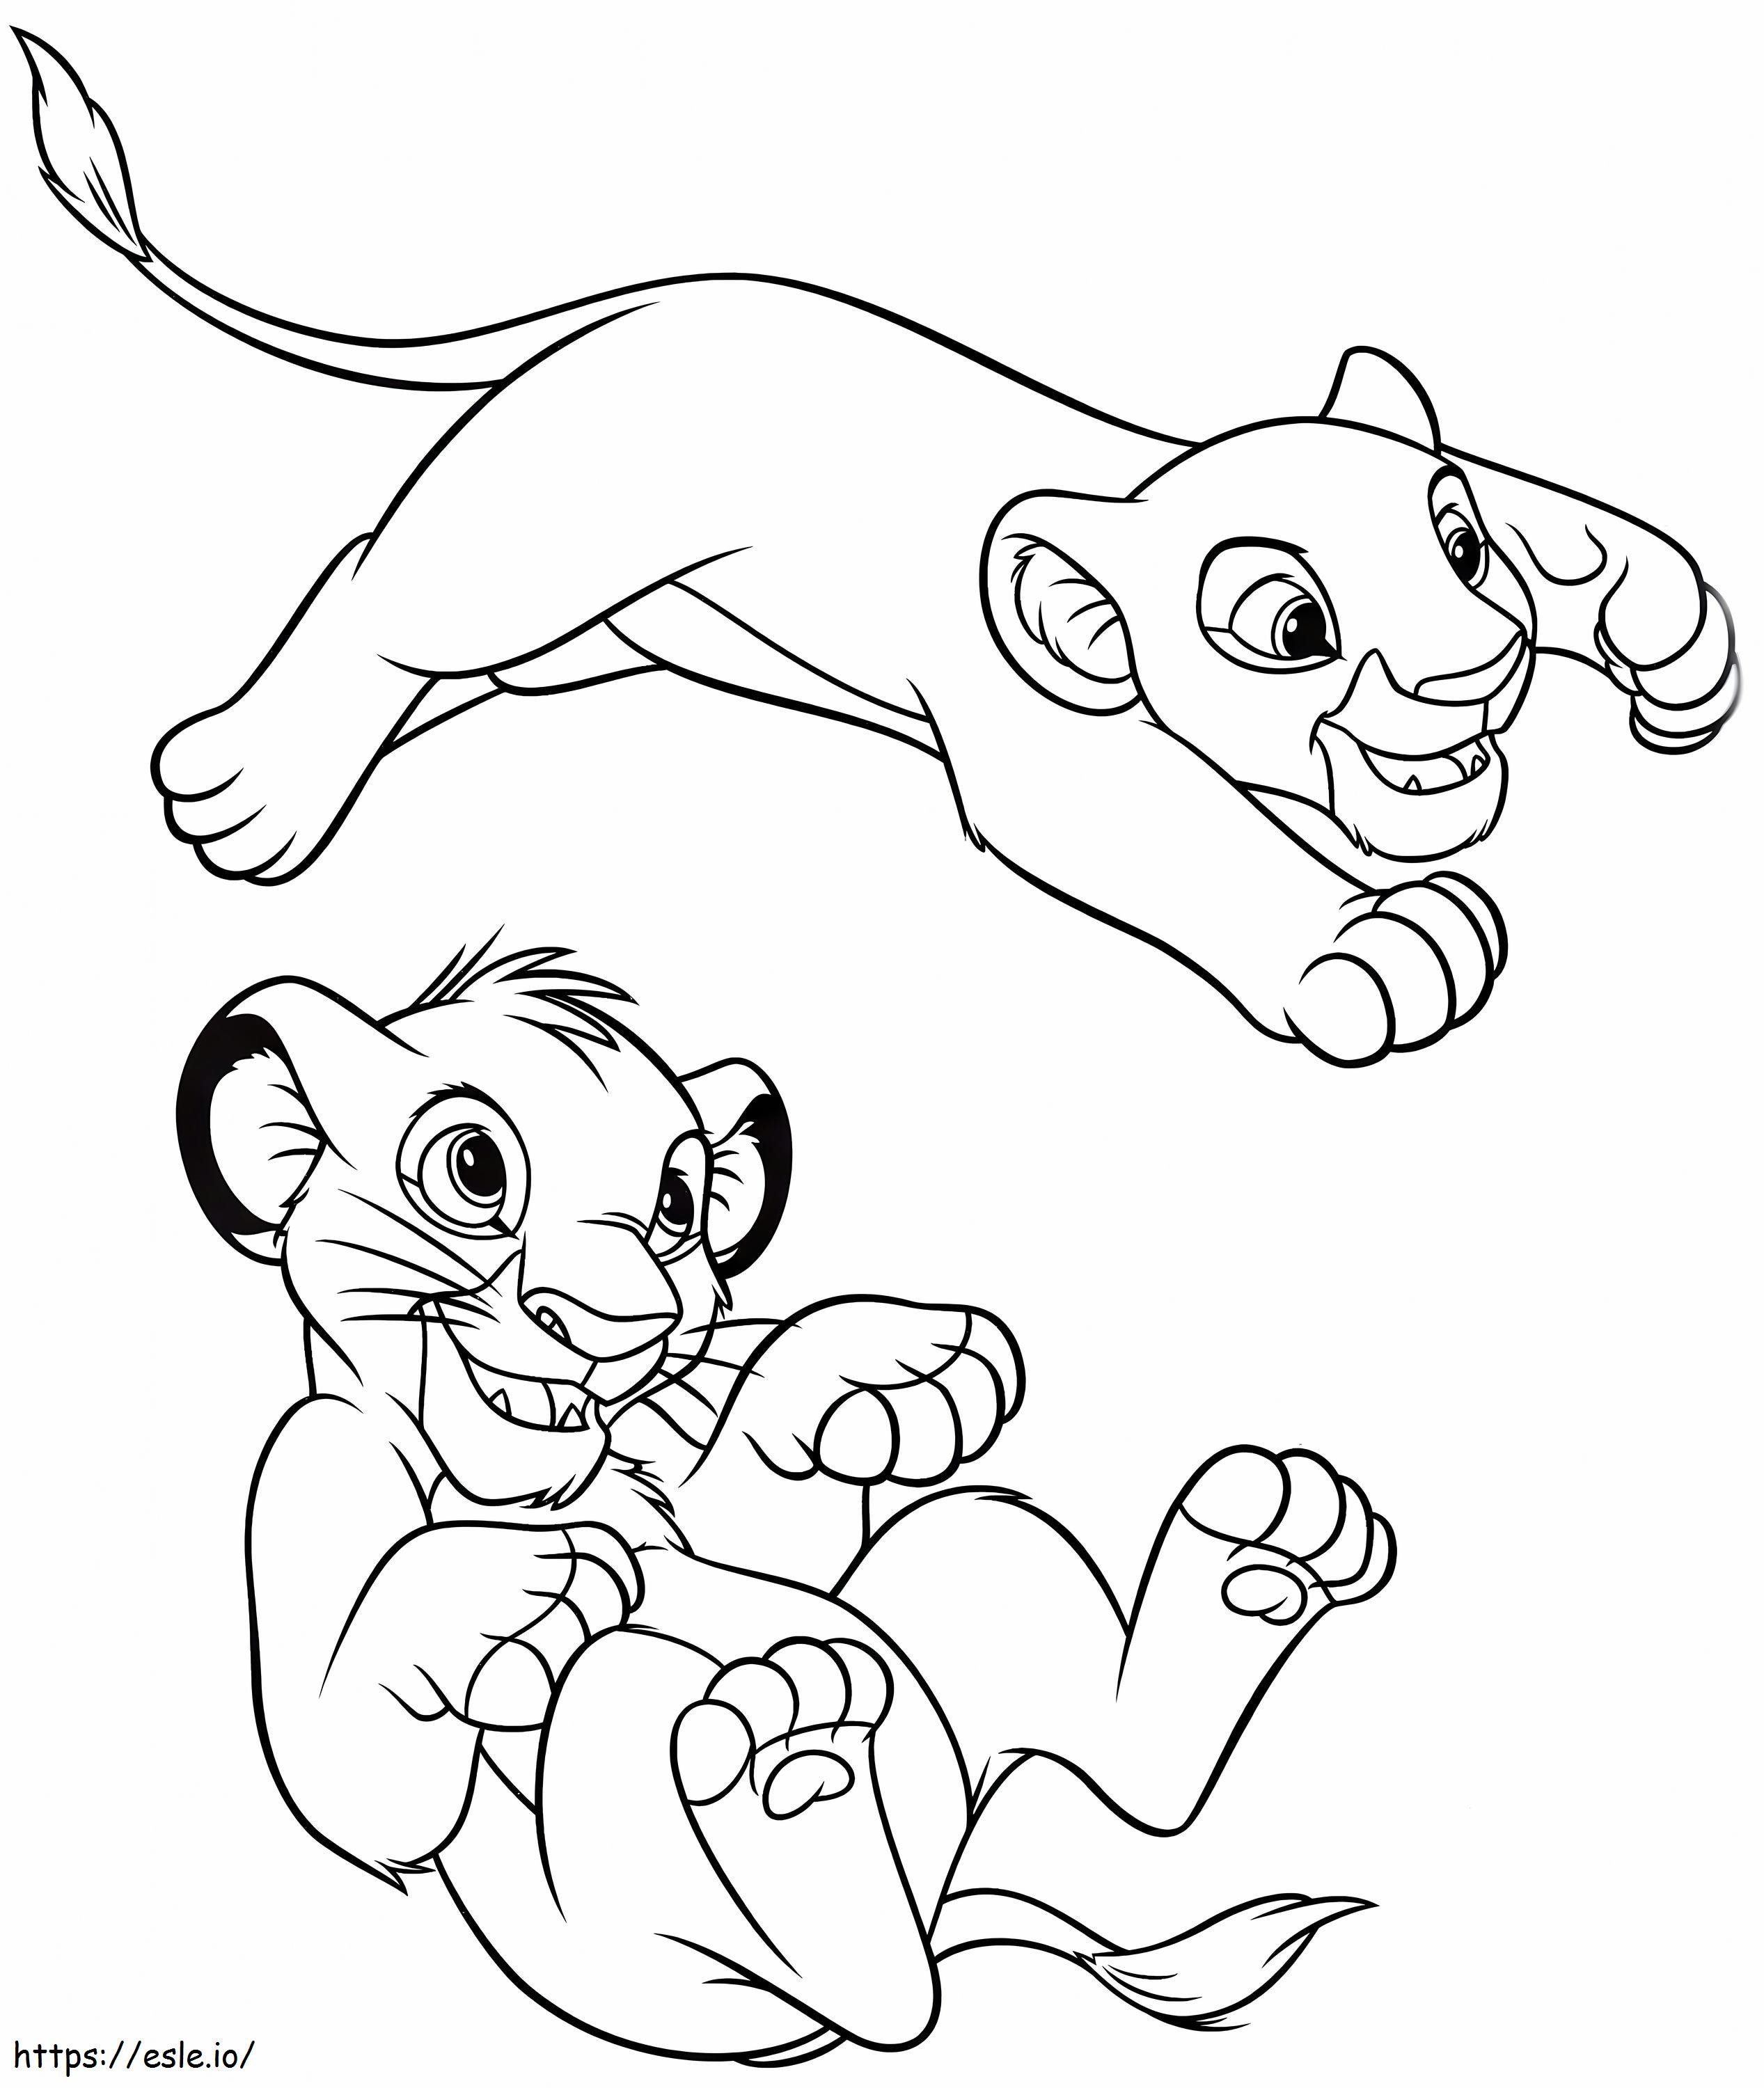 Rei Leão Nala e Simba para colorir